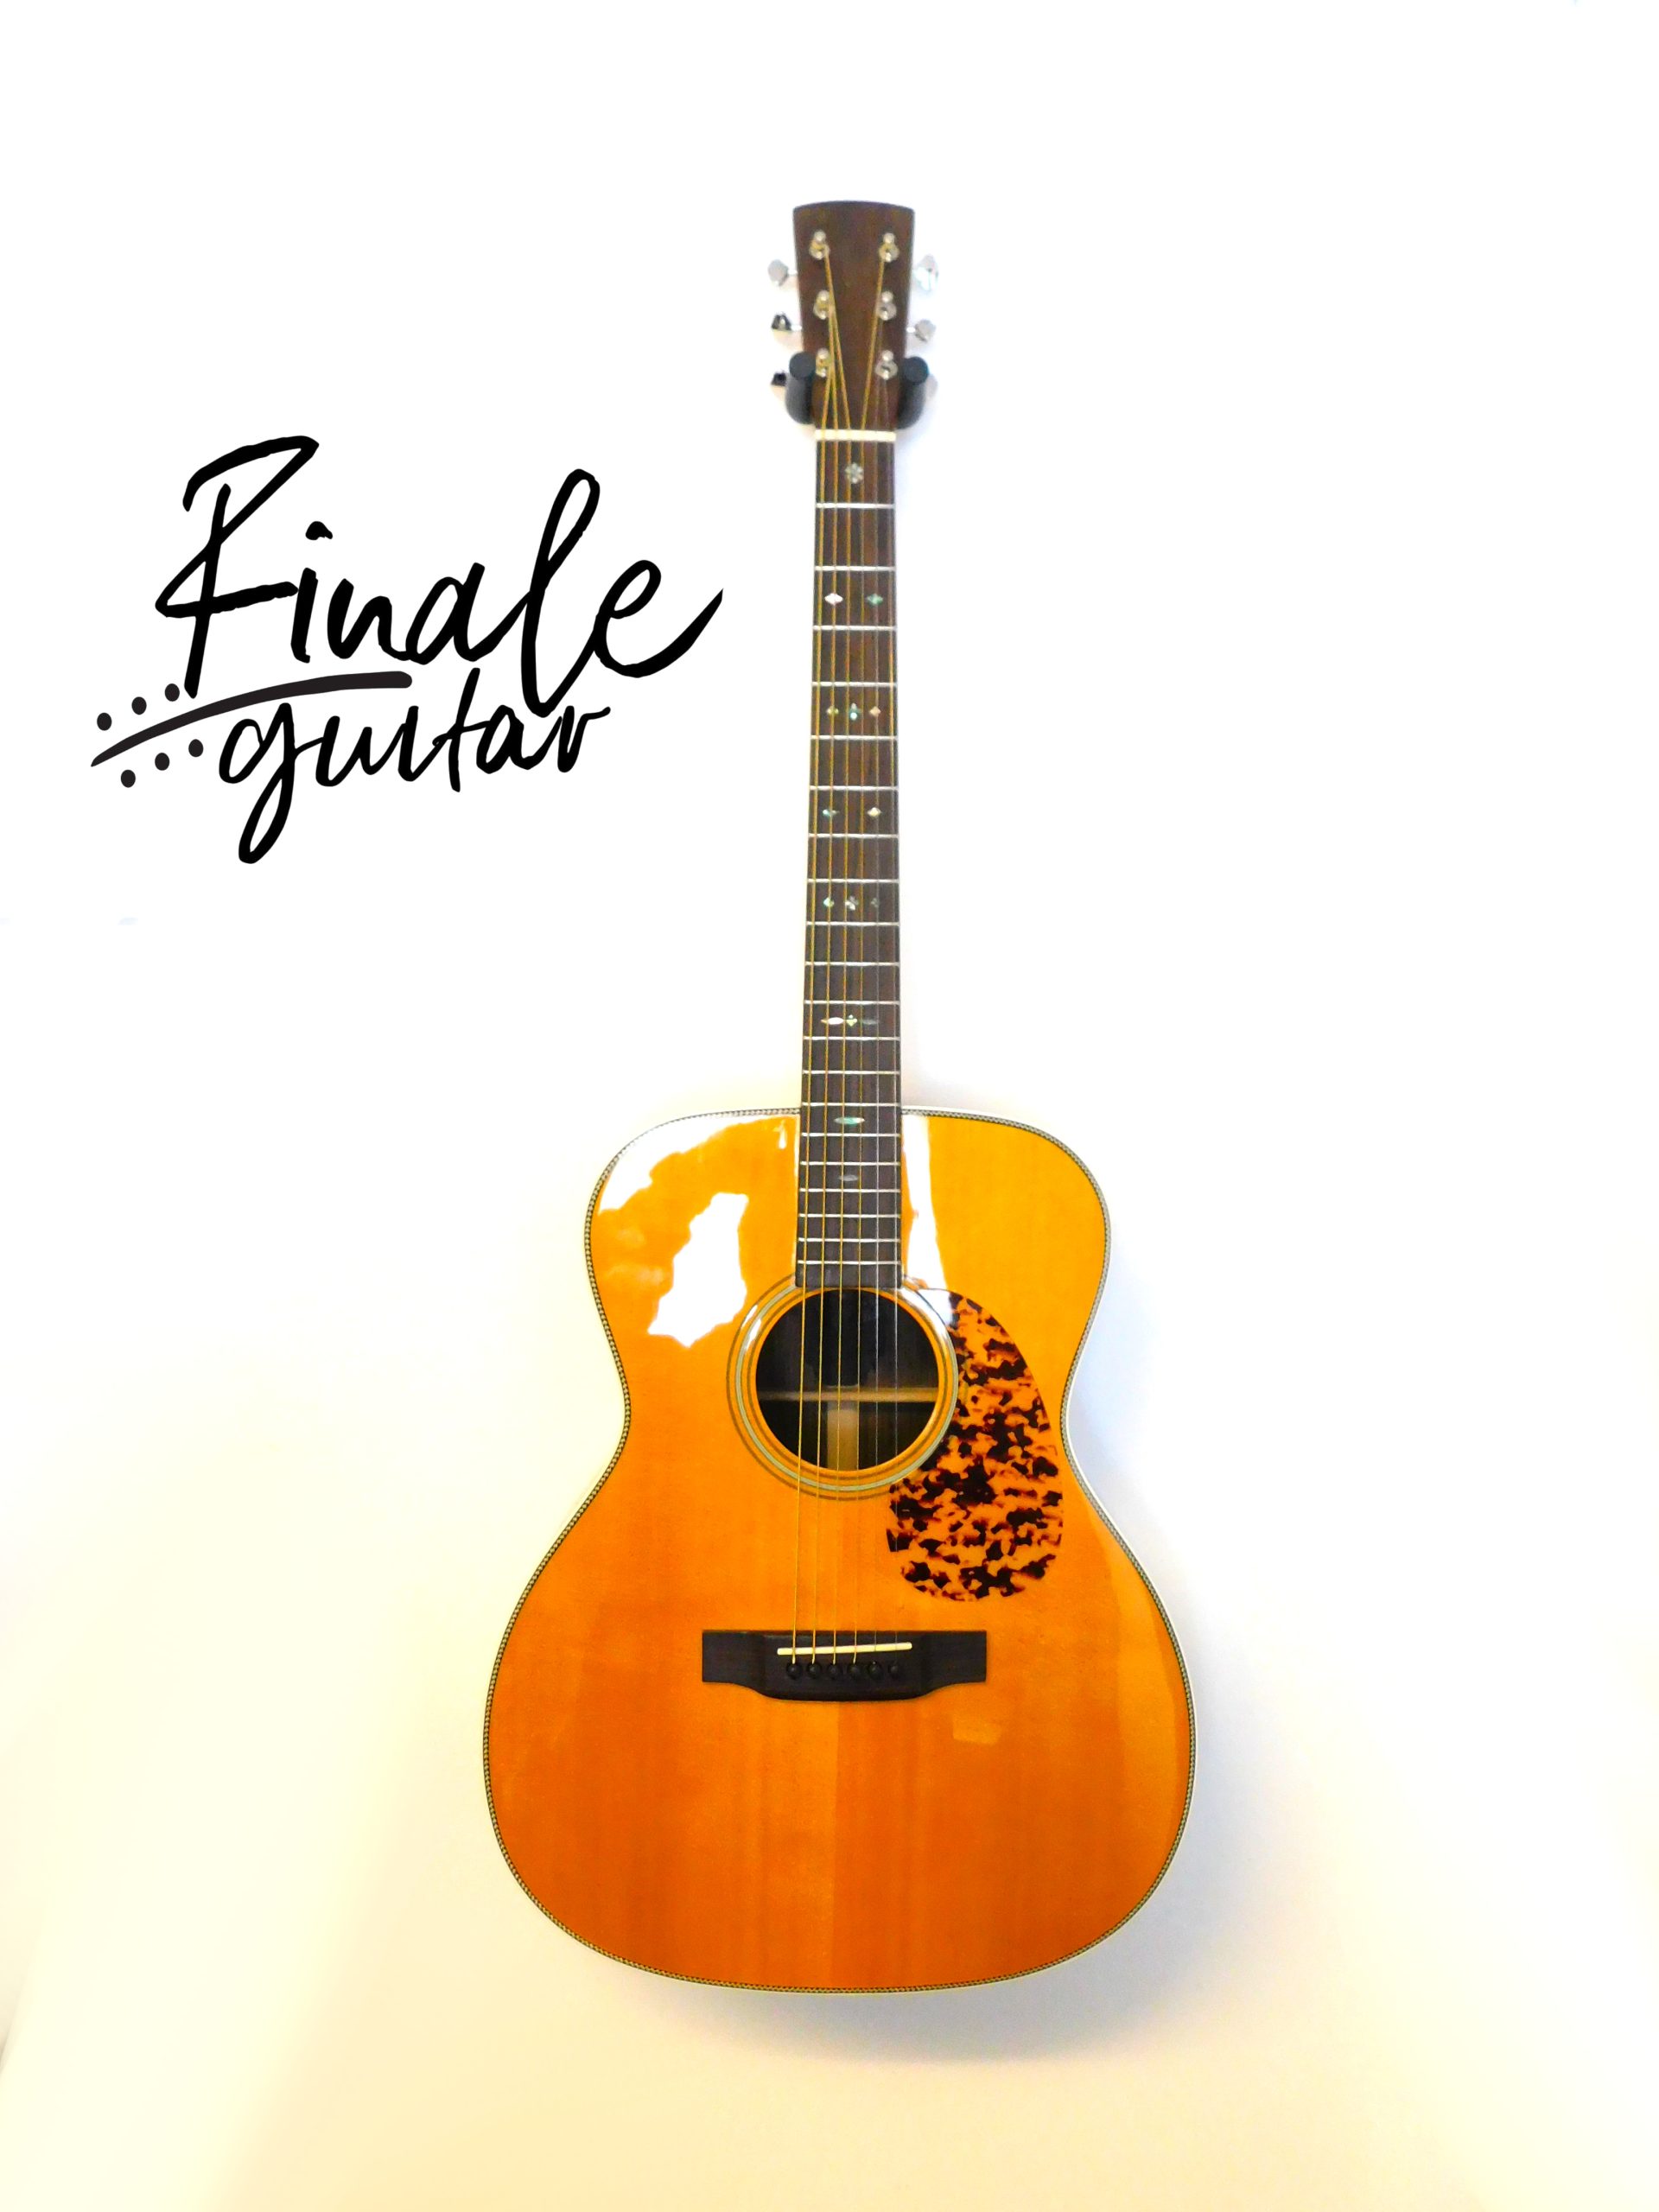 Bluebridge BR163 for sale in our Sheffield guitar shop, Finale Guitar